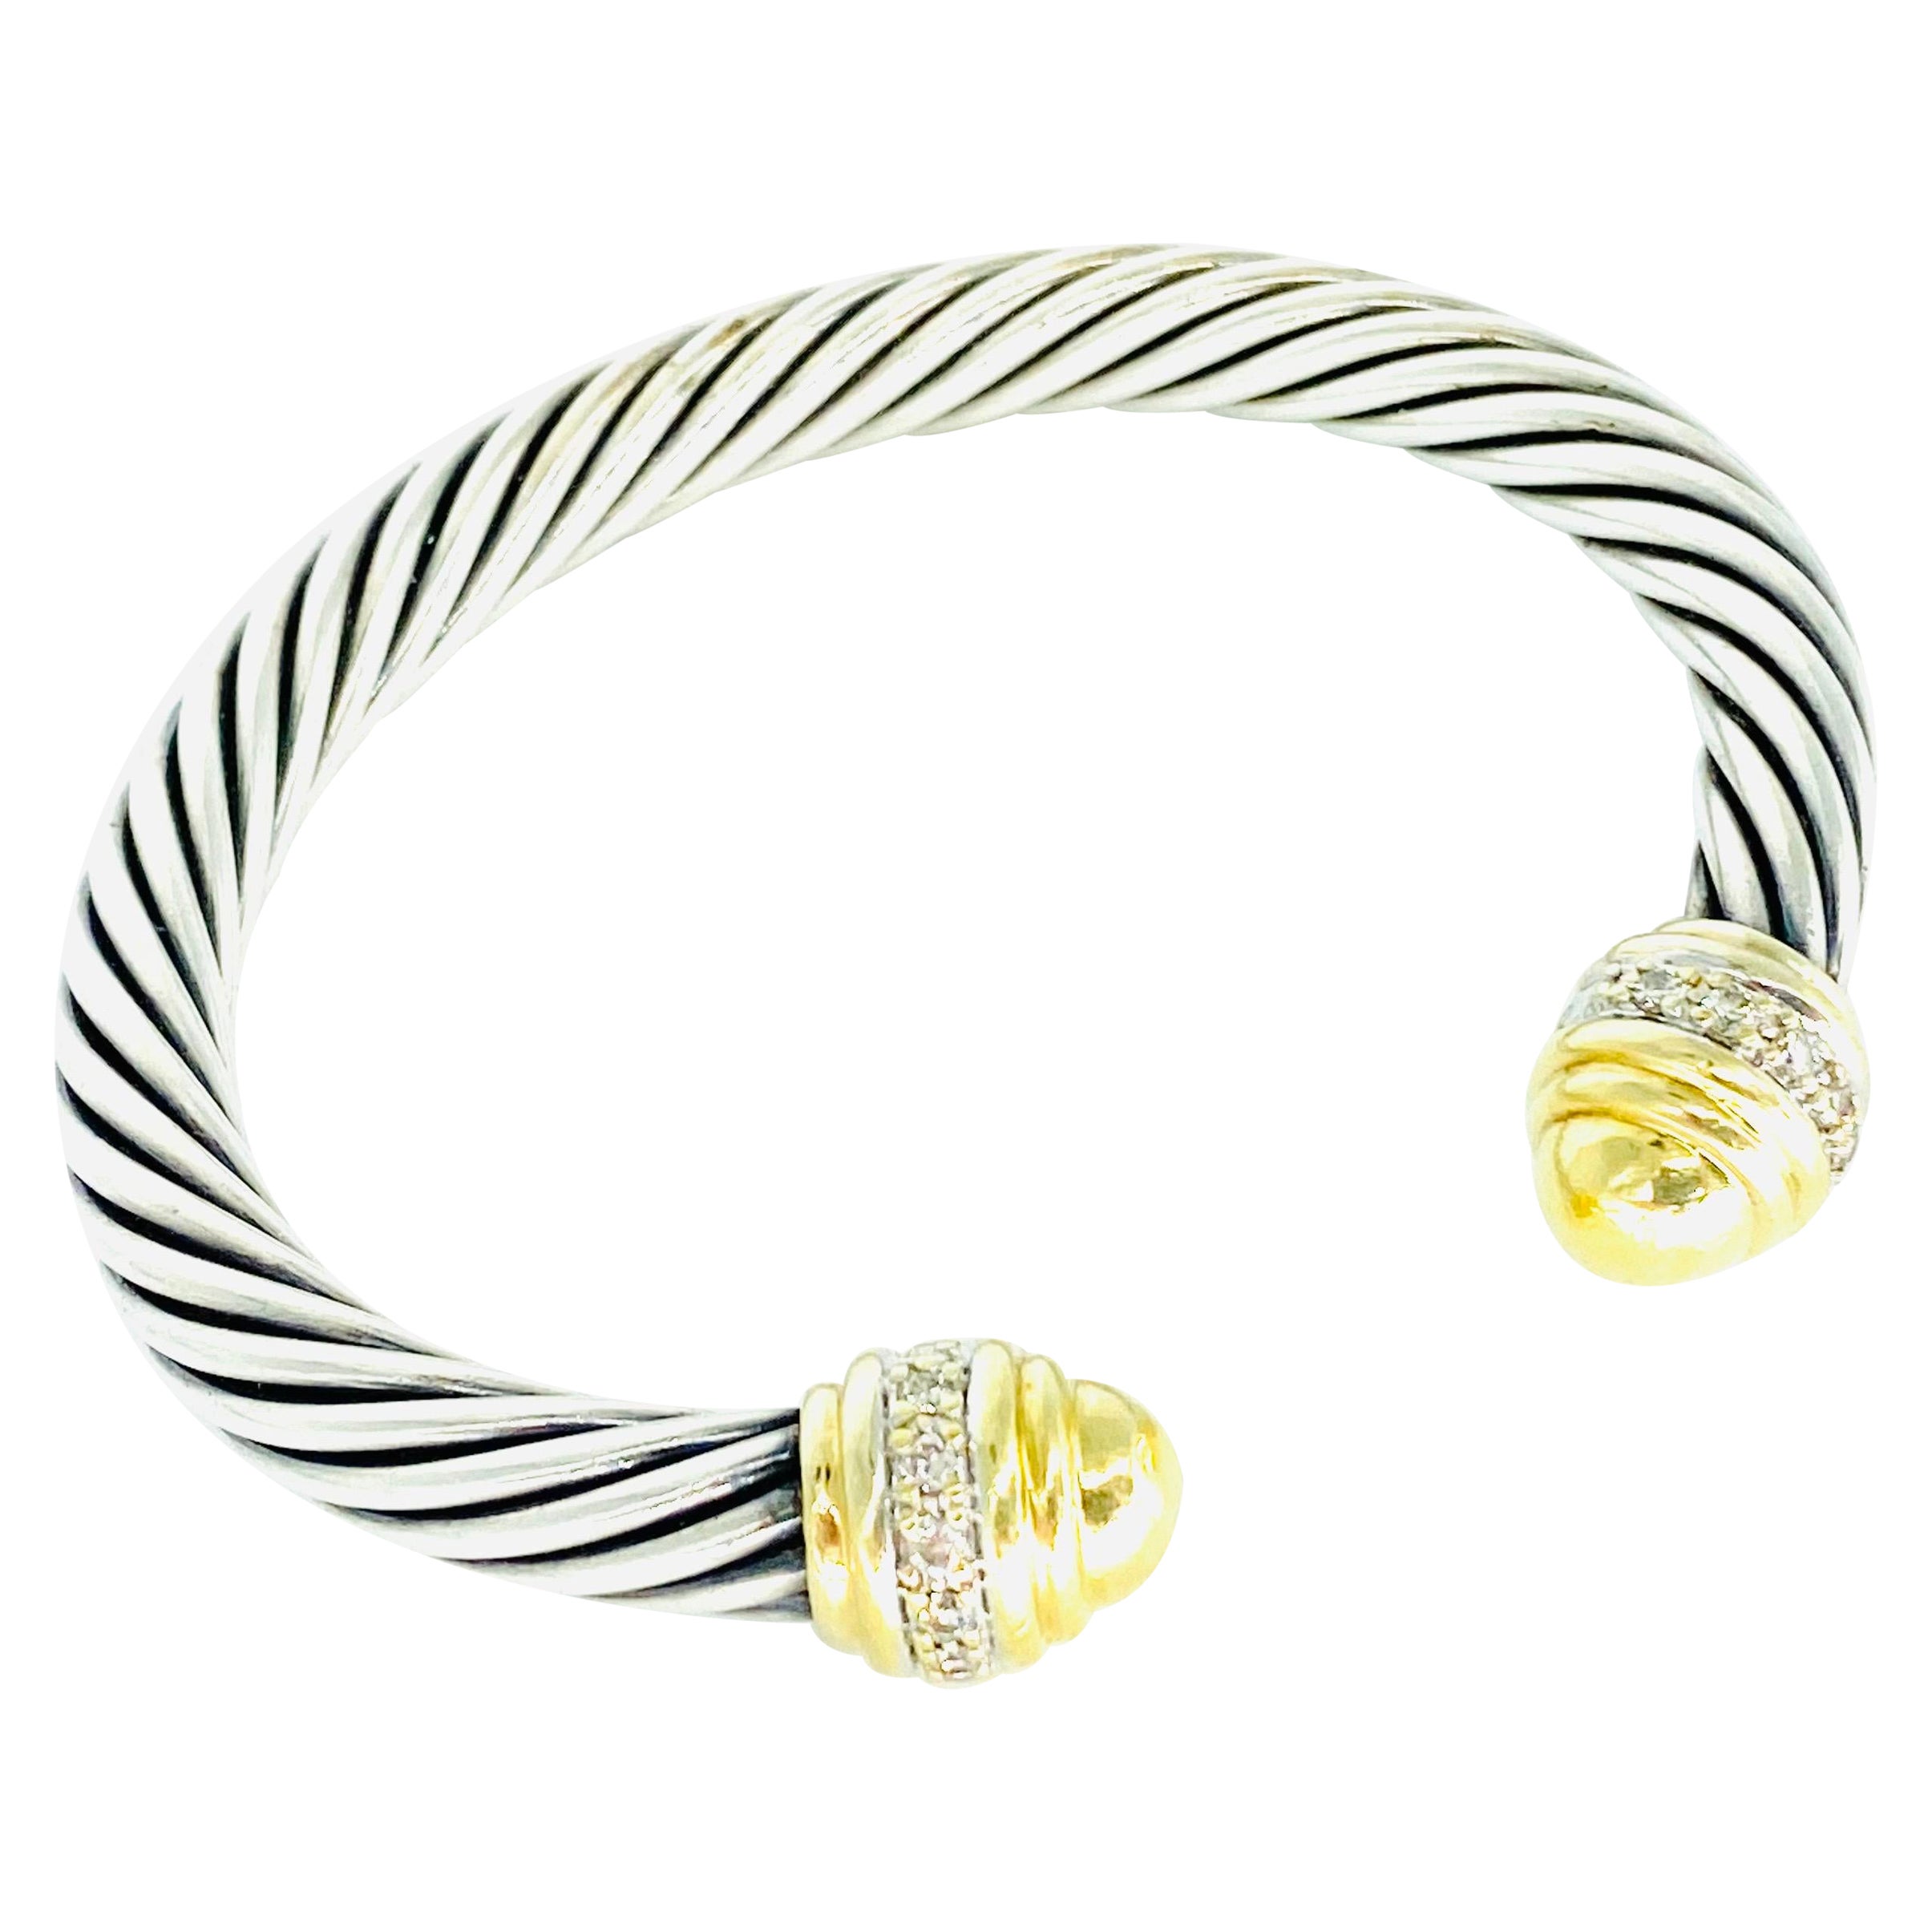 David Yurman Cable Bracelet in Silver/18k Gold with Diamonds Bangle